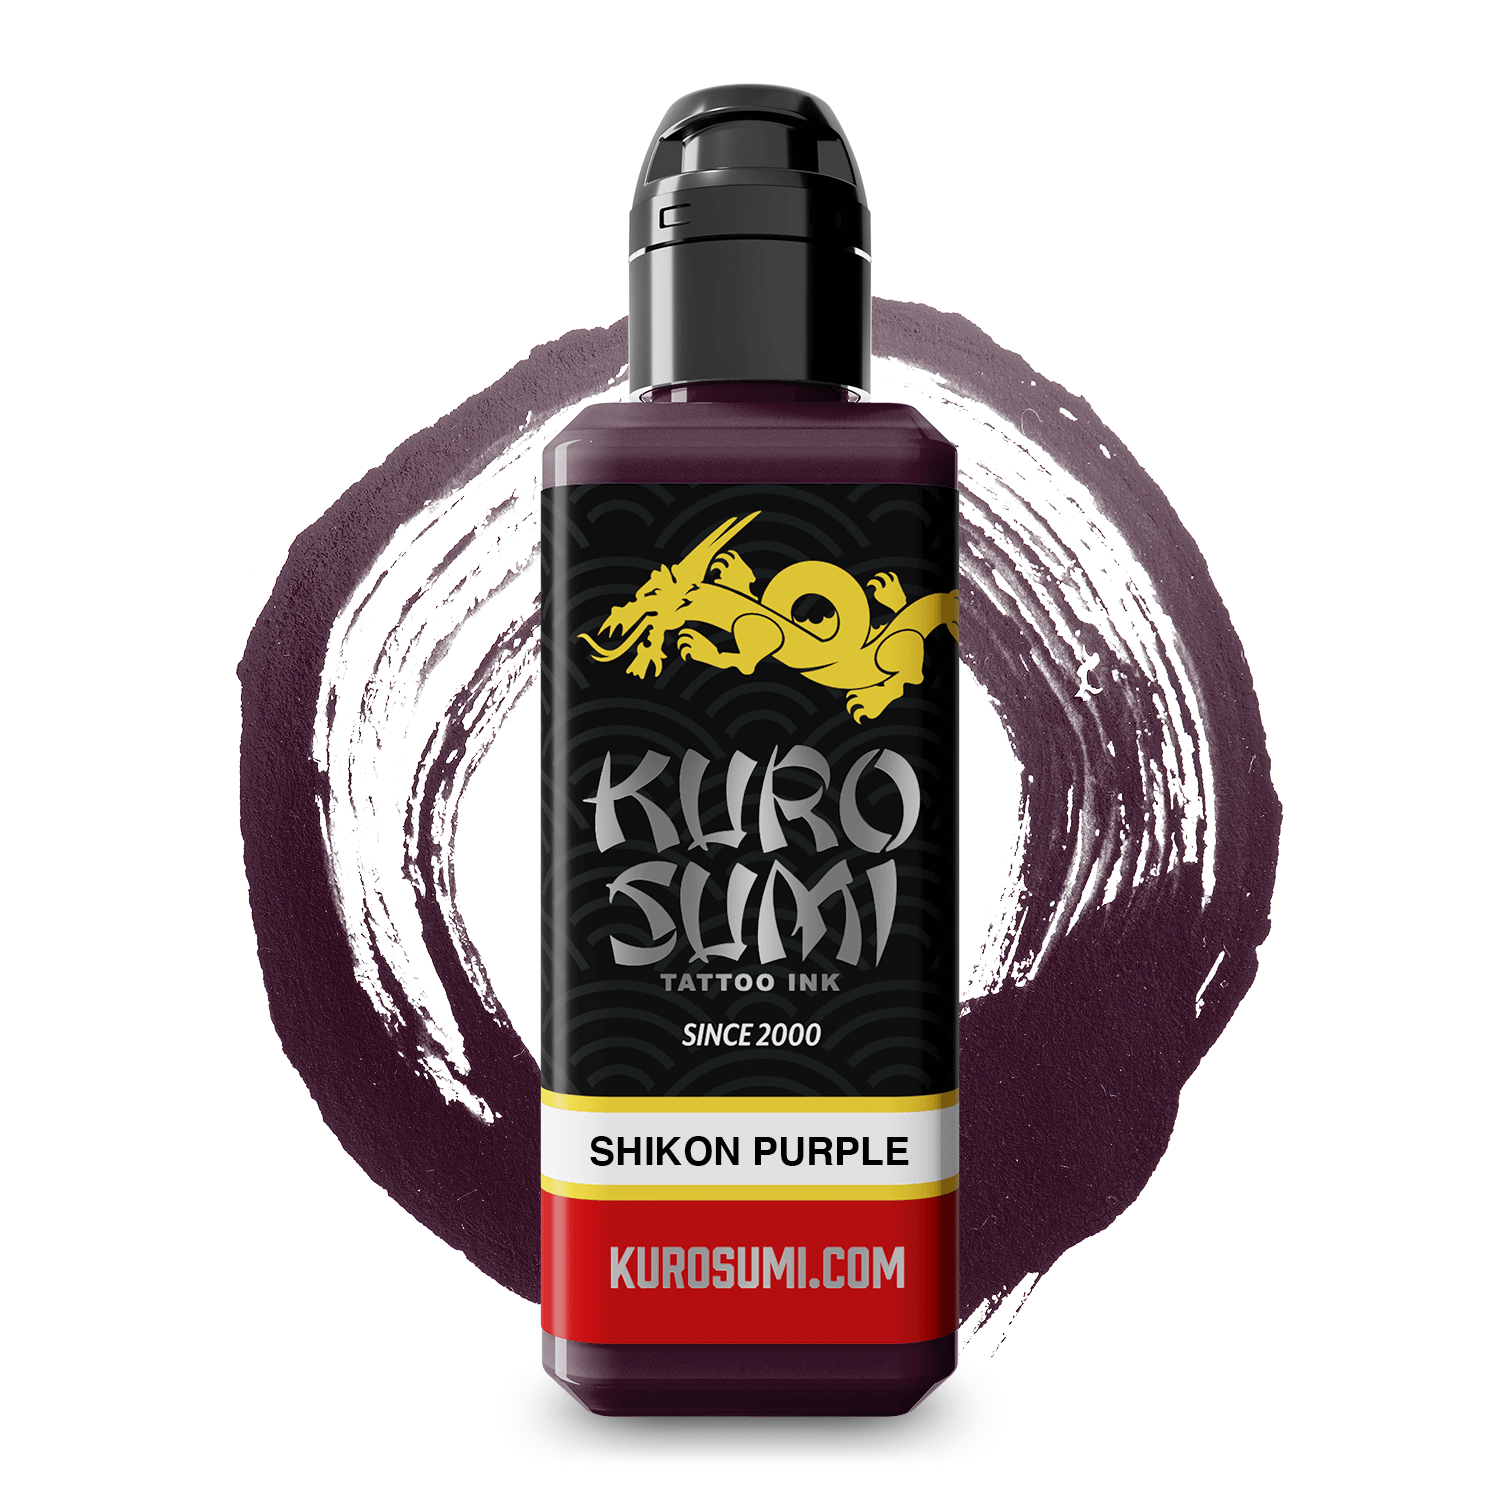 KSSKP Kuro Sumi Shikon Purple 3oz